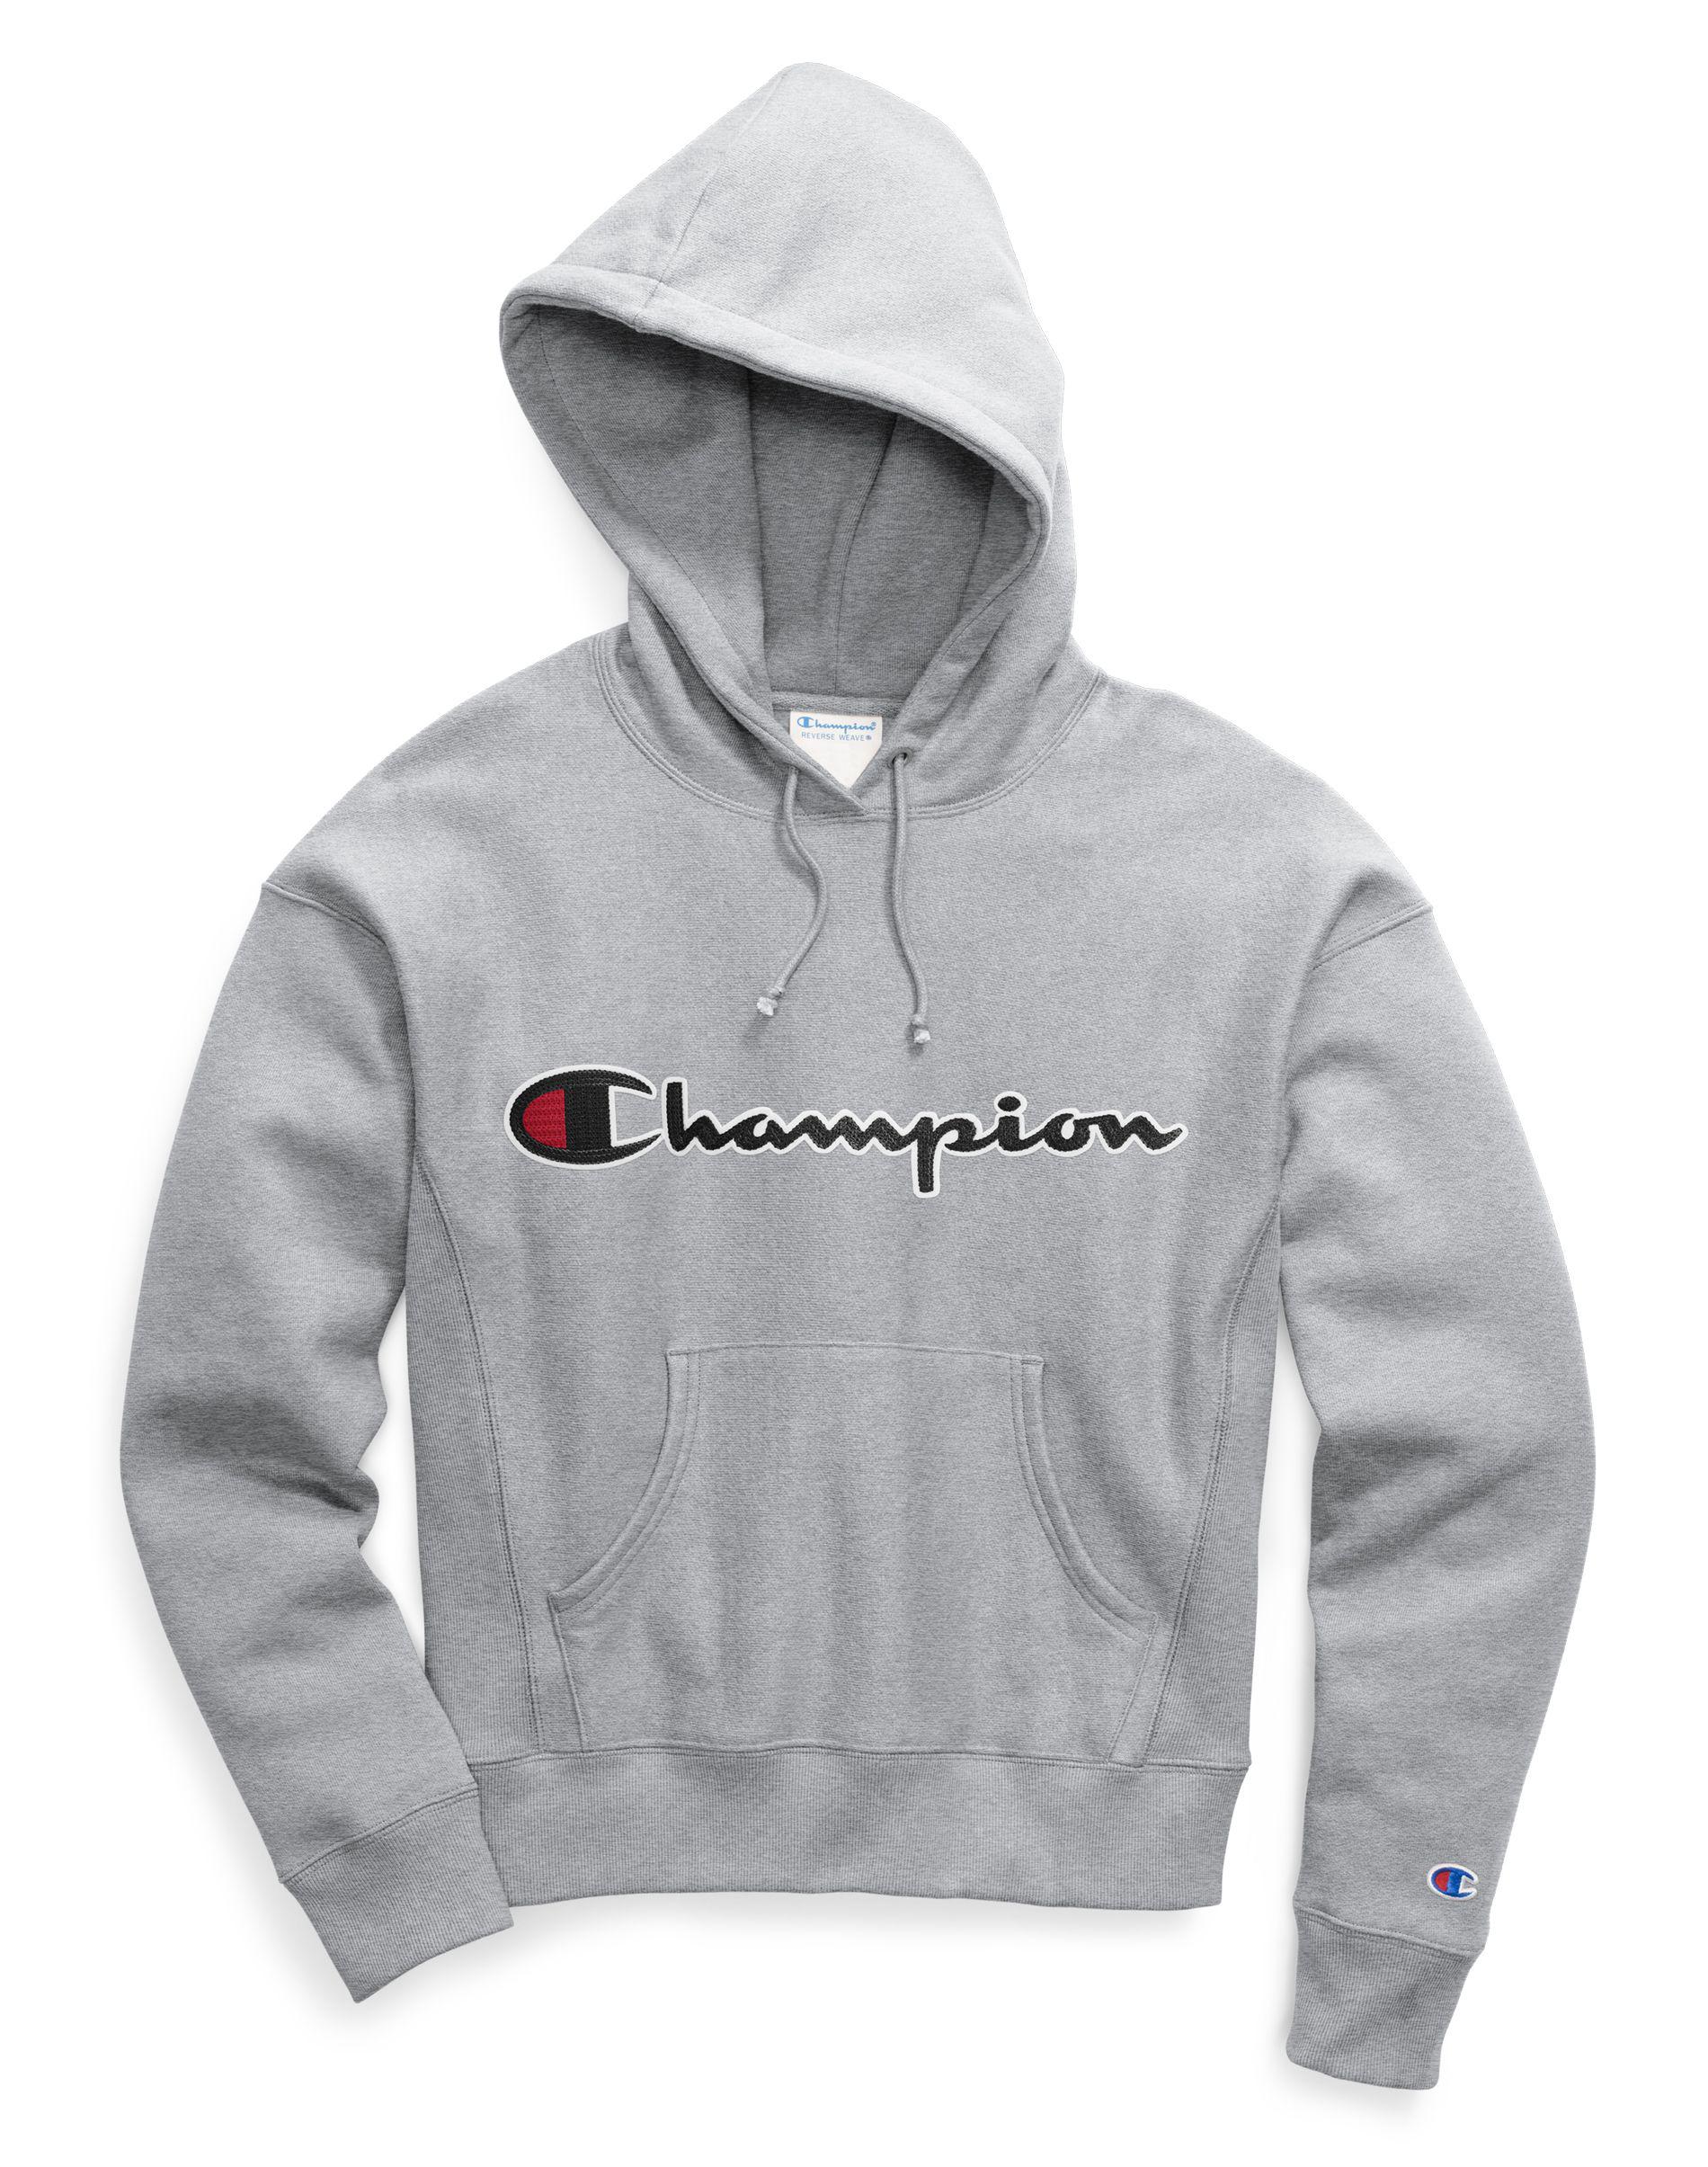 champion hoodie stitched